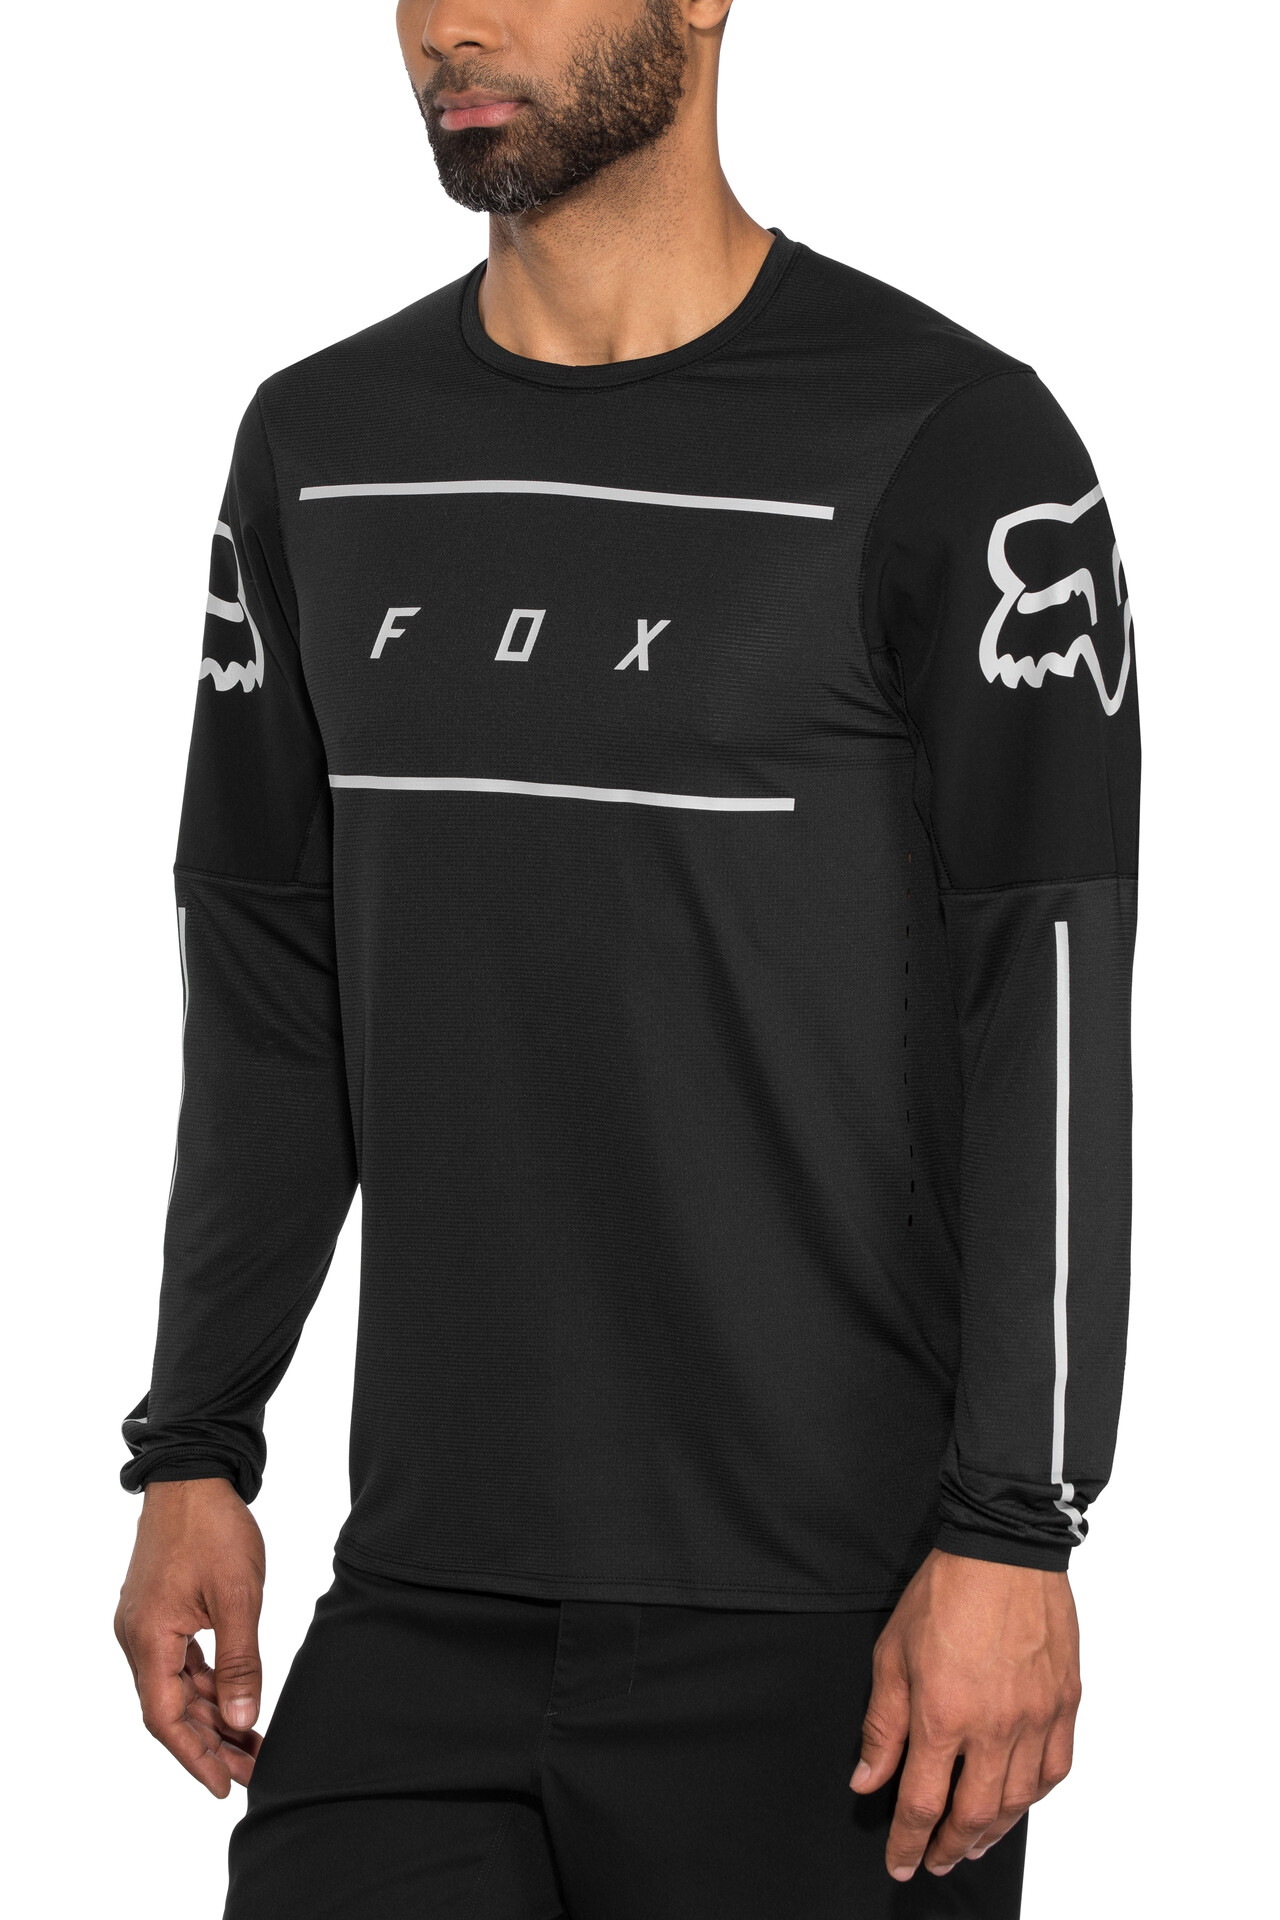 fox flexair fine line jersey